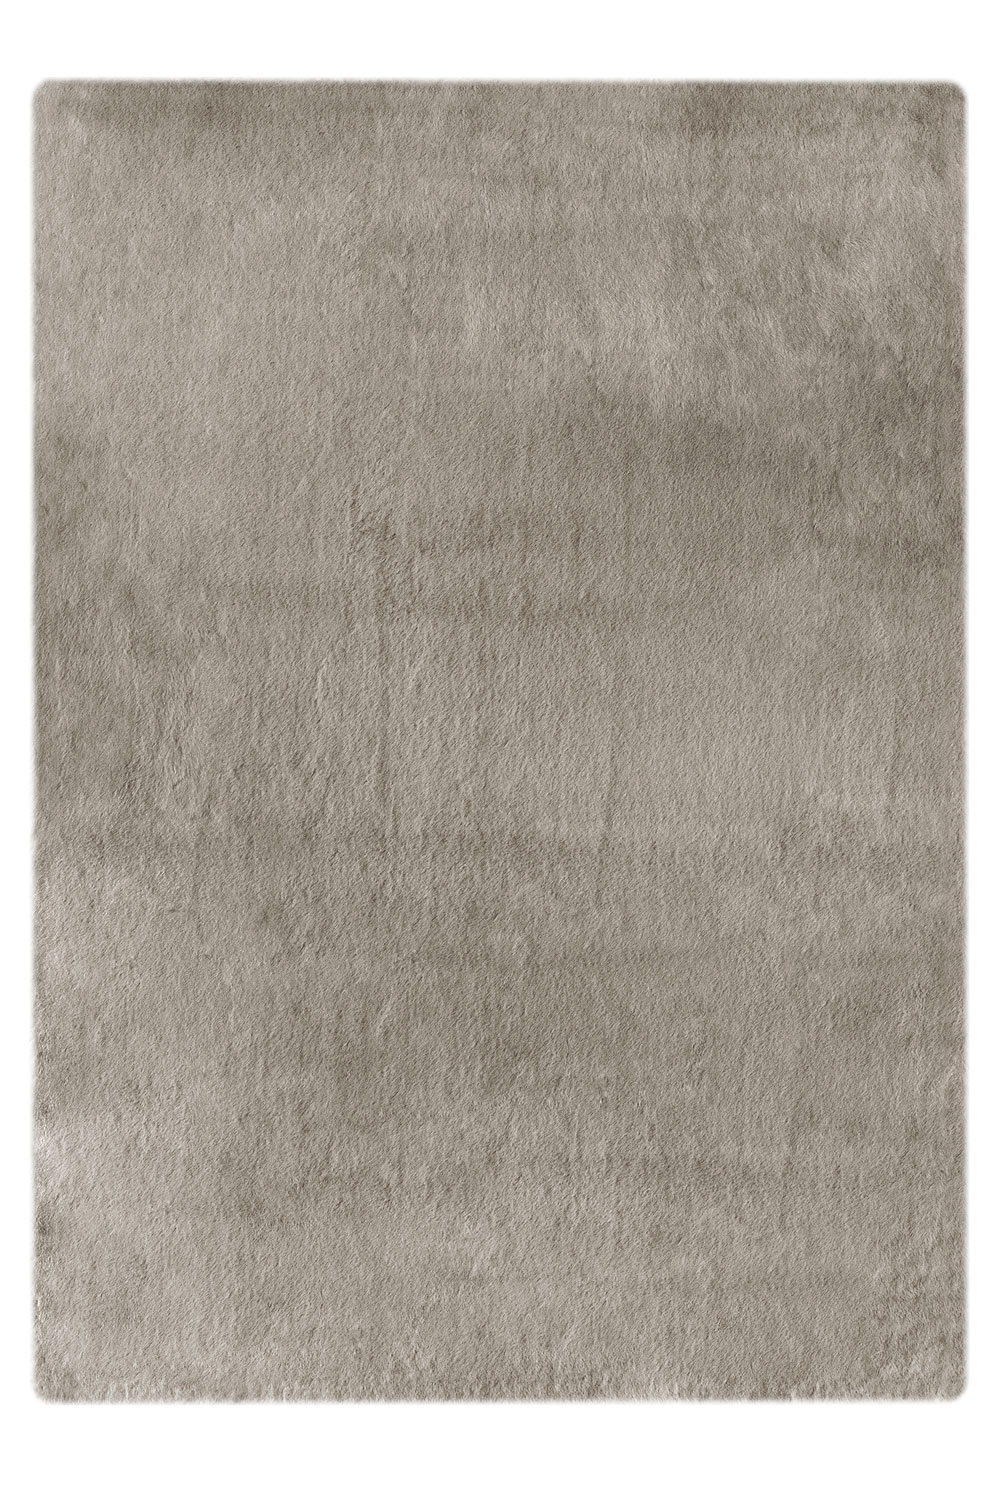 Kusový koberec HEAVEN 800 Taupe 160x230 cm